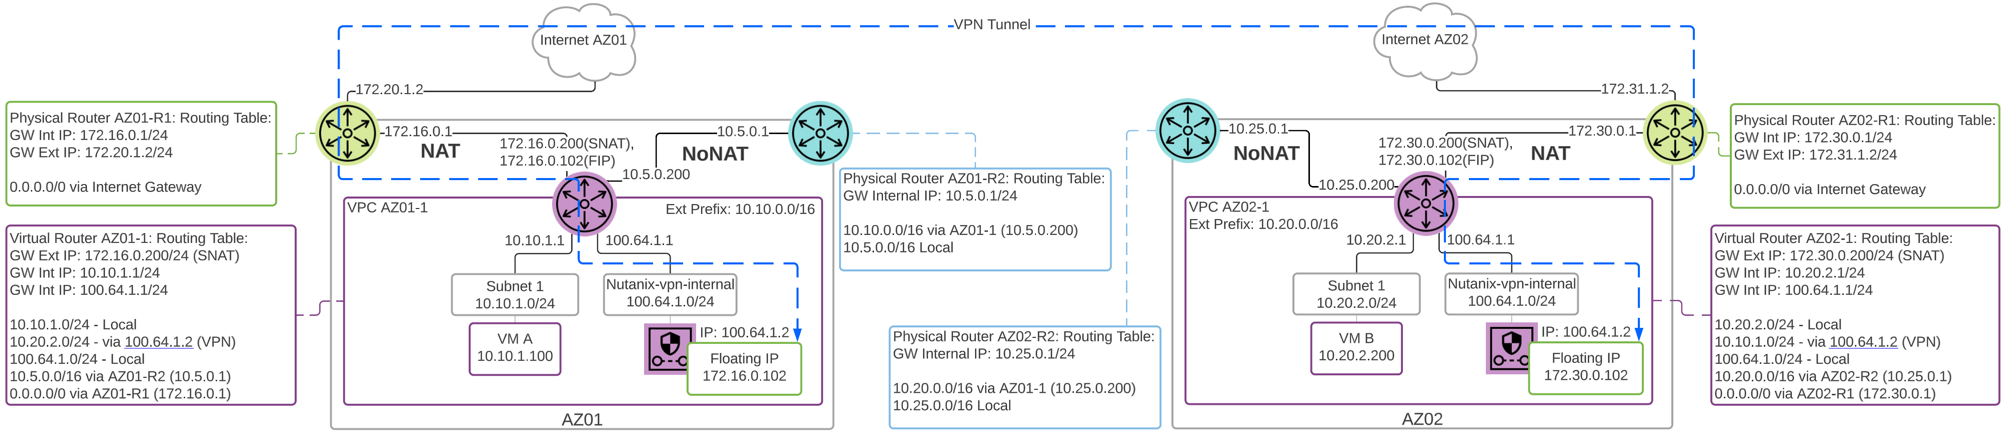 Flow Virtual Networking - Layer 3 VPN NoNAT Detail